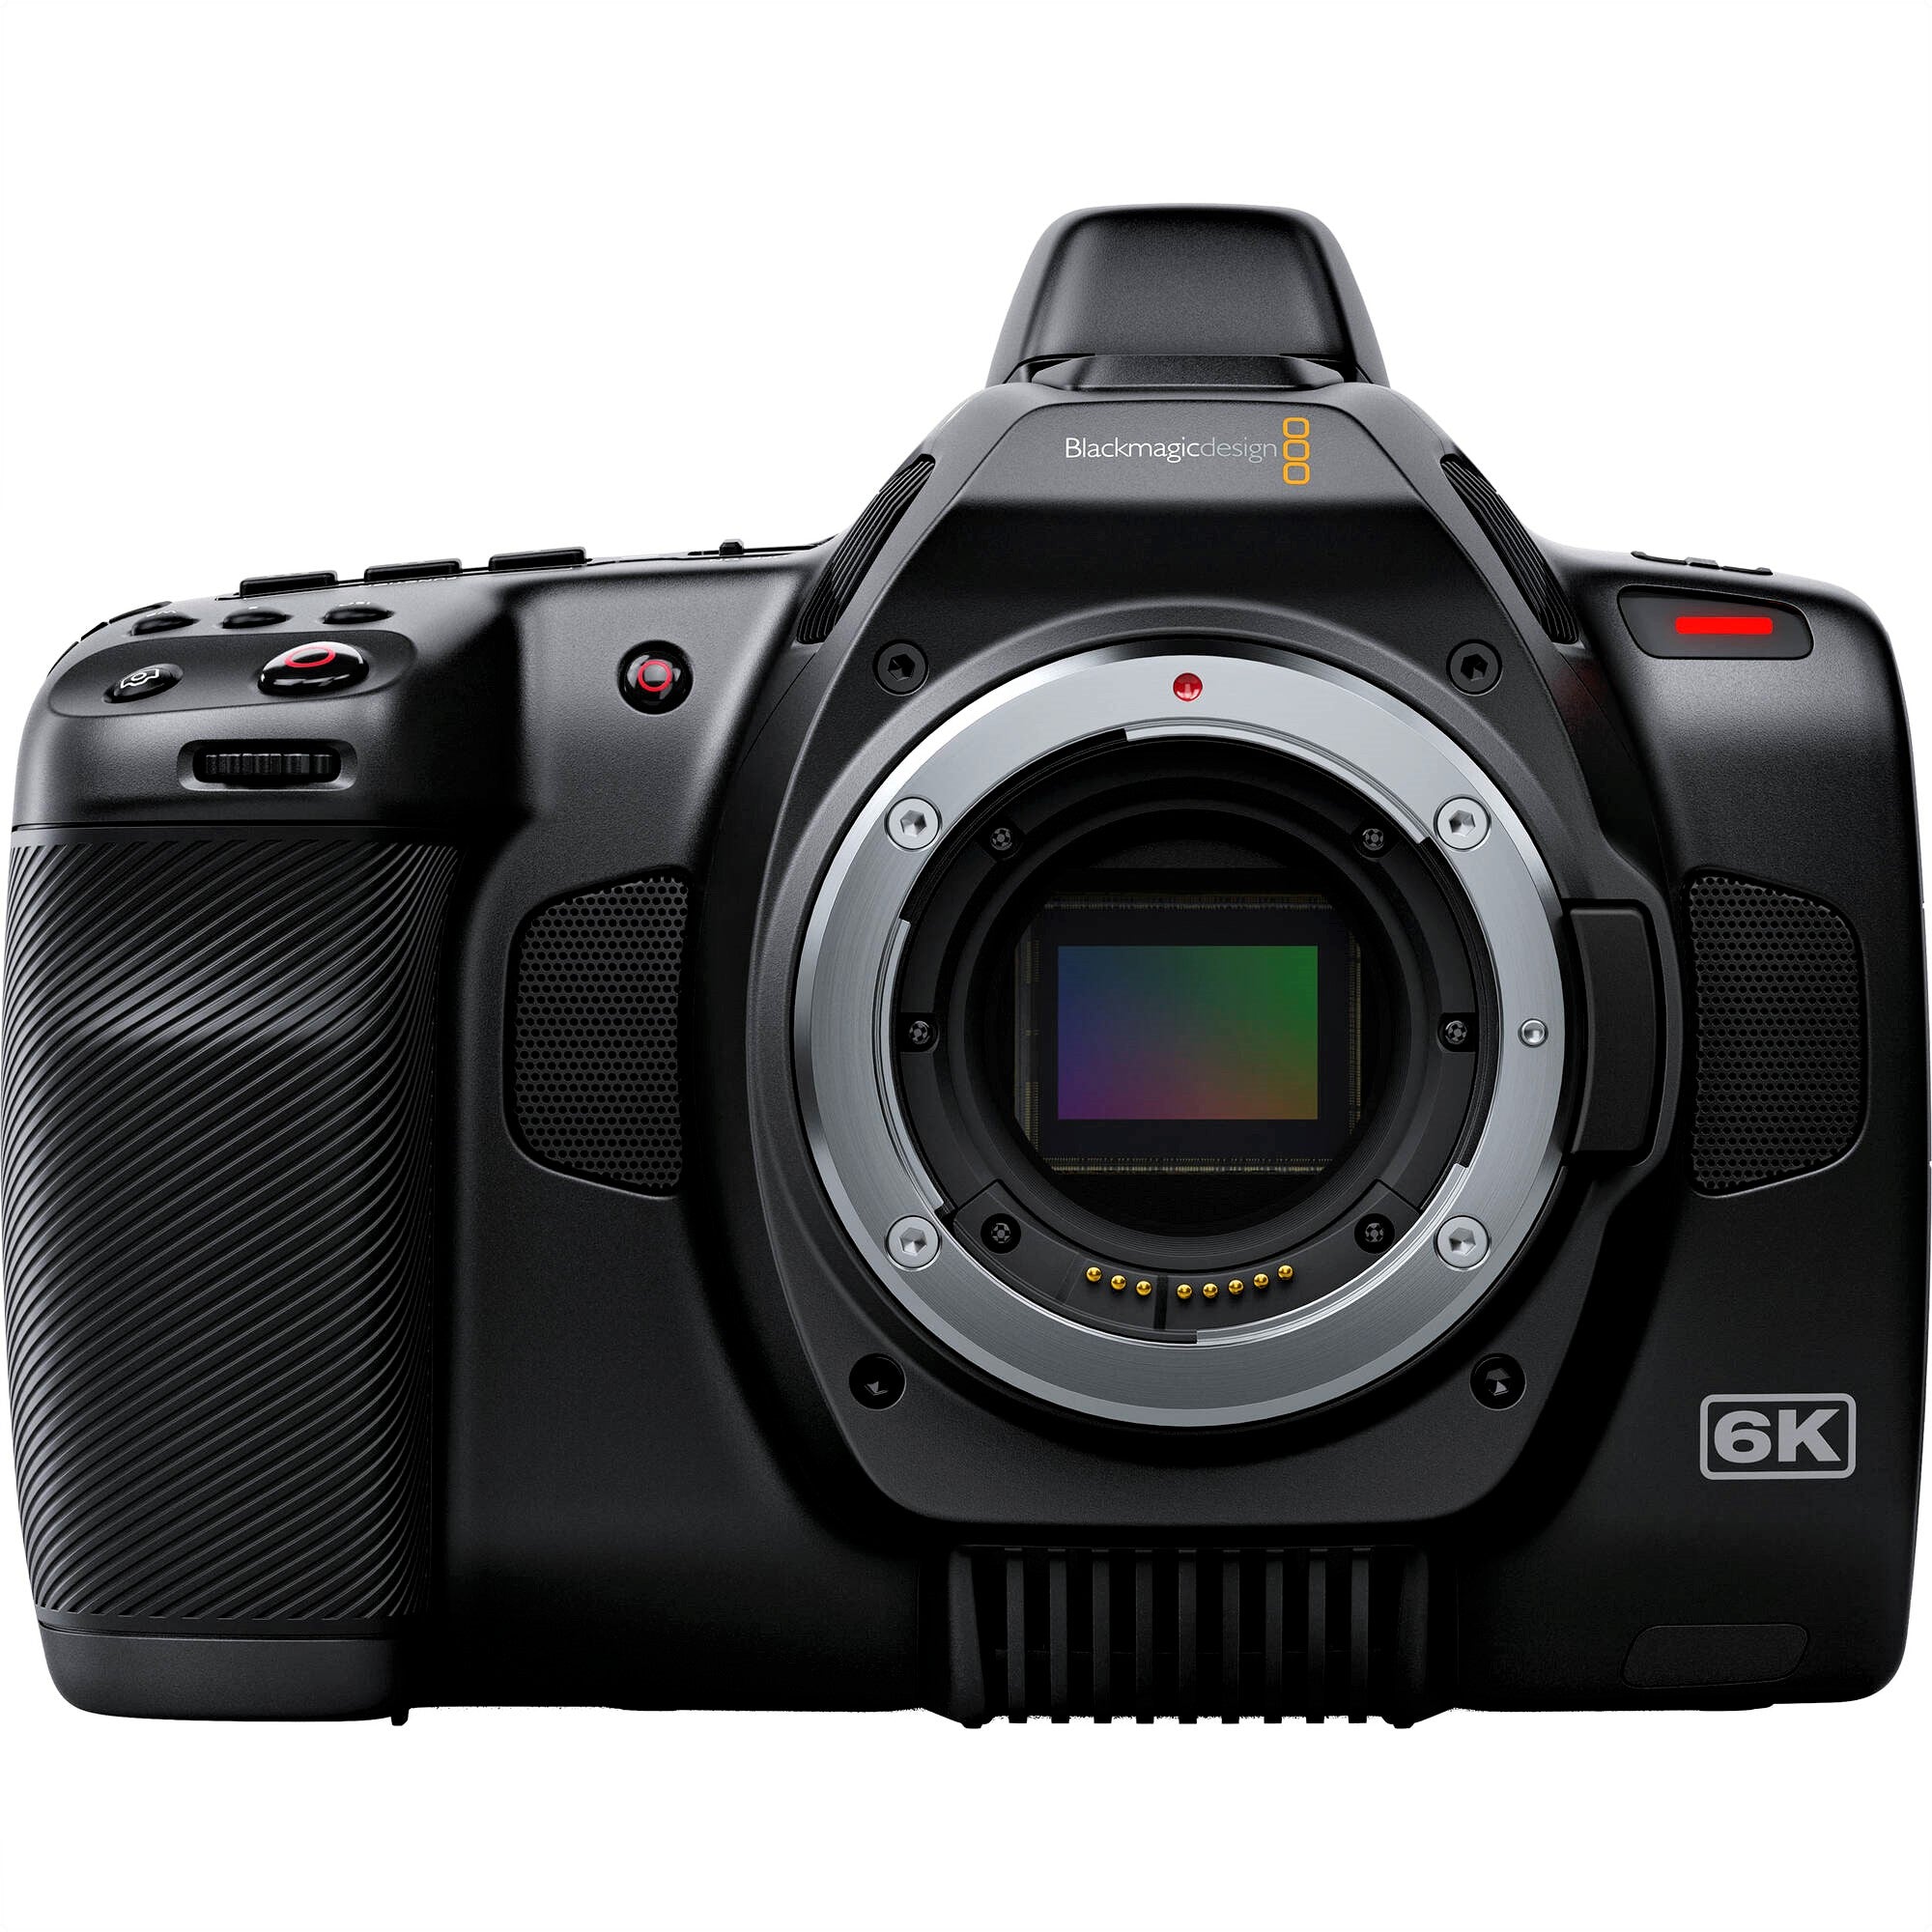 Blackmagic Design Pocket Cinema Camera 6K G2 with DaVinci Resolve Studio